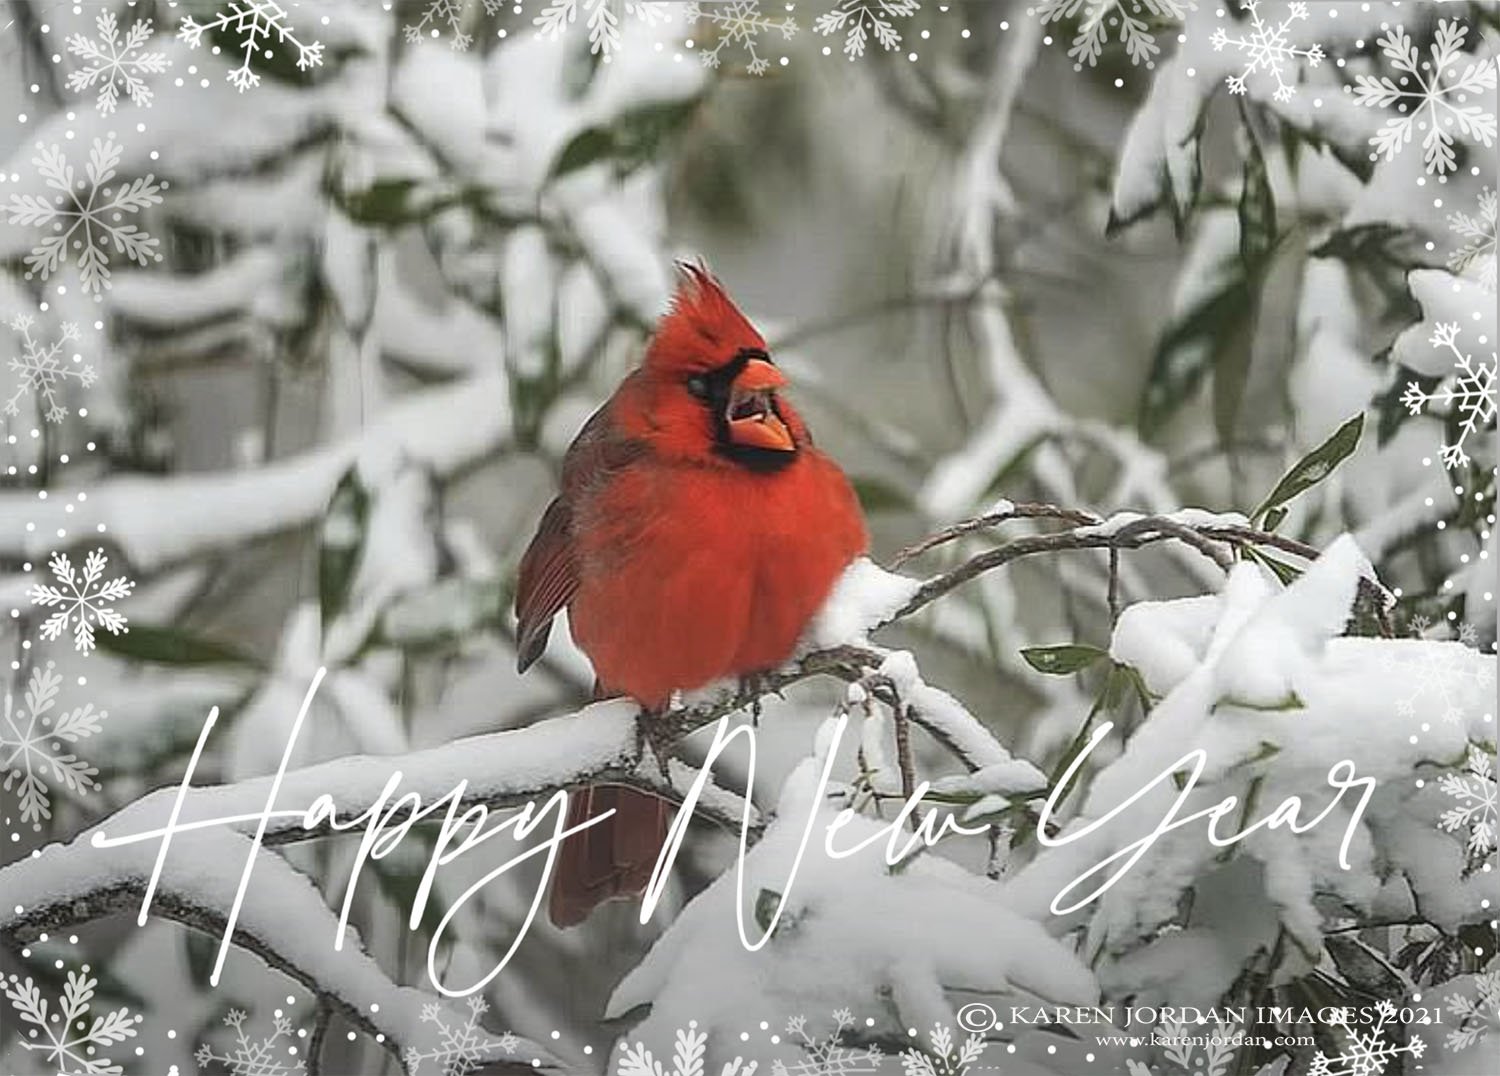 karen_jordan_picture_of_the_week_71_Happy_New_Year_bright_red_cardinal_state_bird_red_plumage_perched_snowy_branch_VA_wildlife_winter_snow_scene_northern_neck_VA_copyright-_karen_jordan_images-4web.jpg